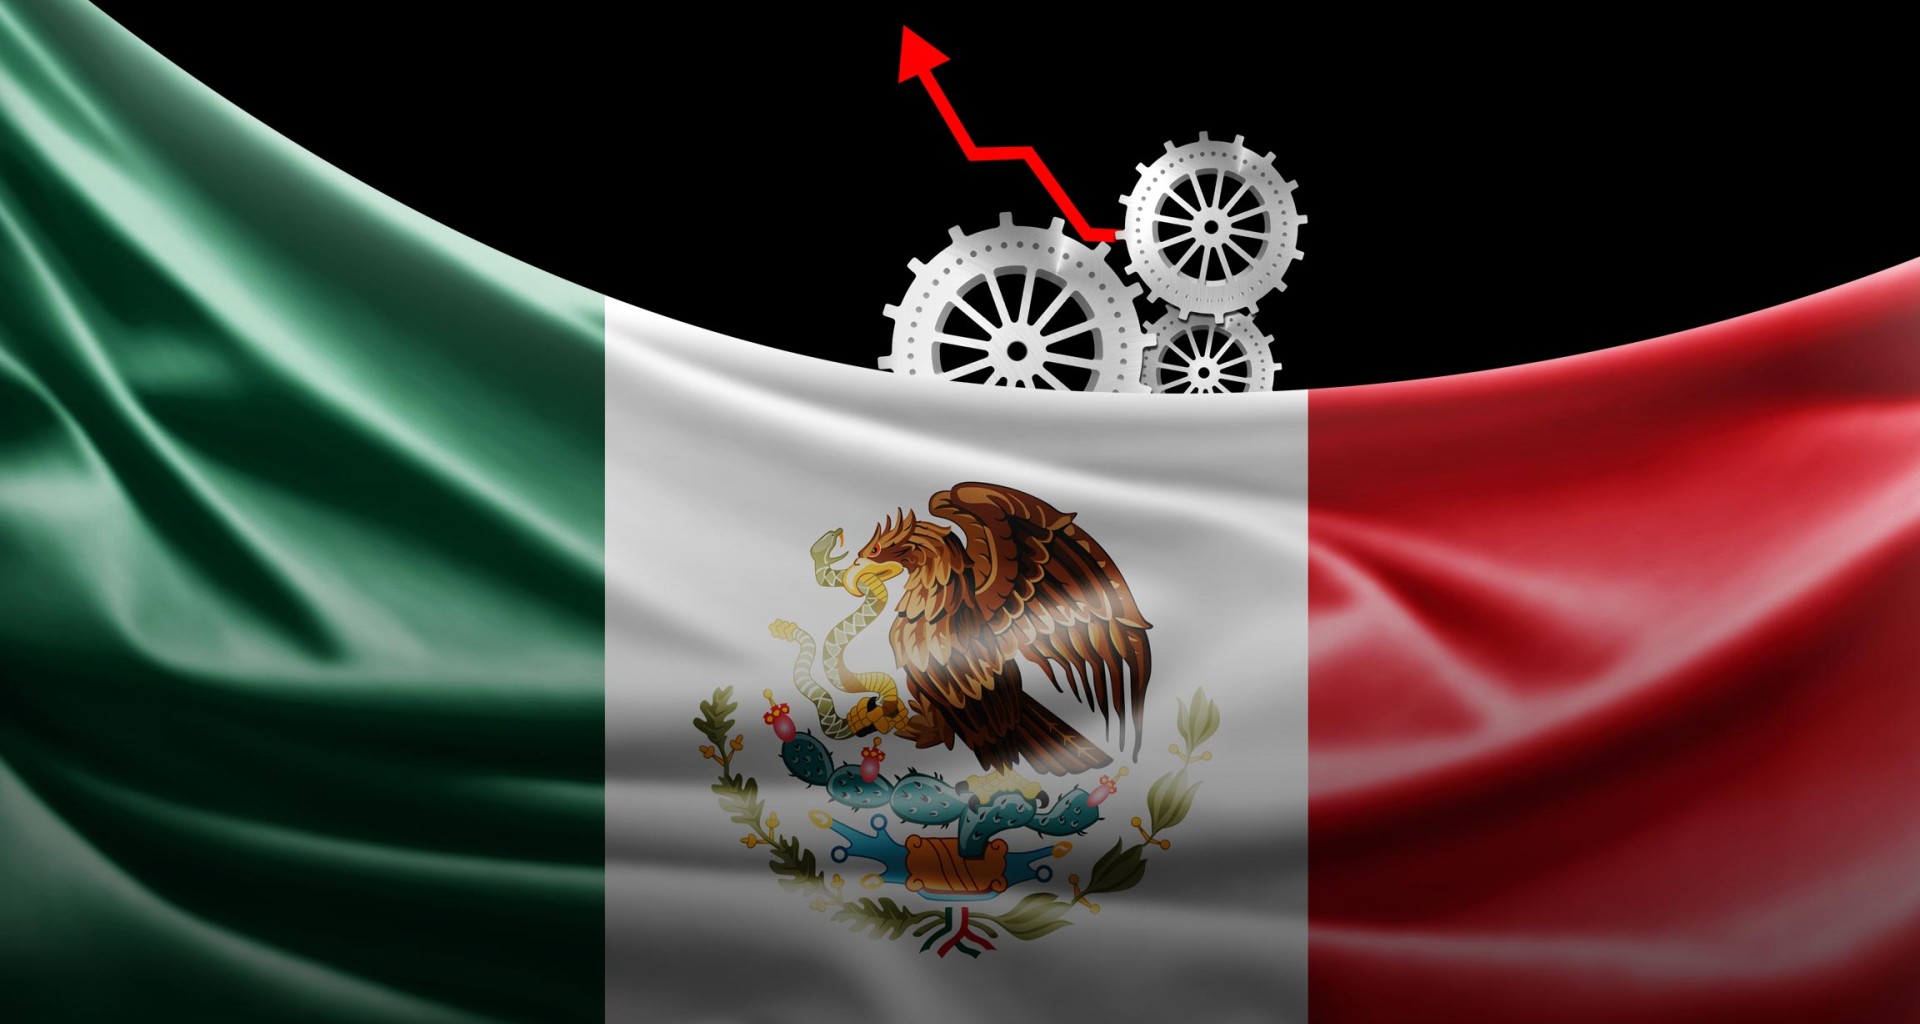 Guía ética para la transformación de México (opinión)